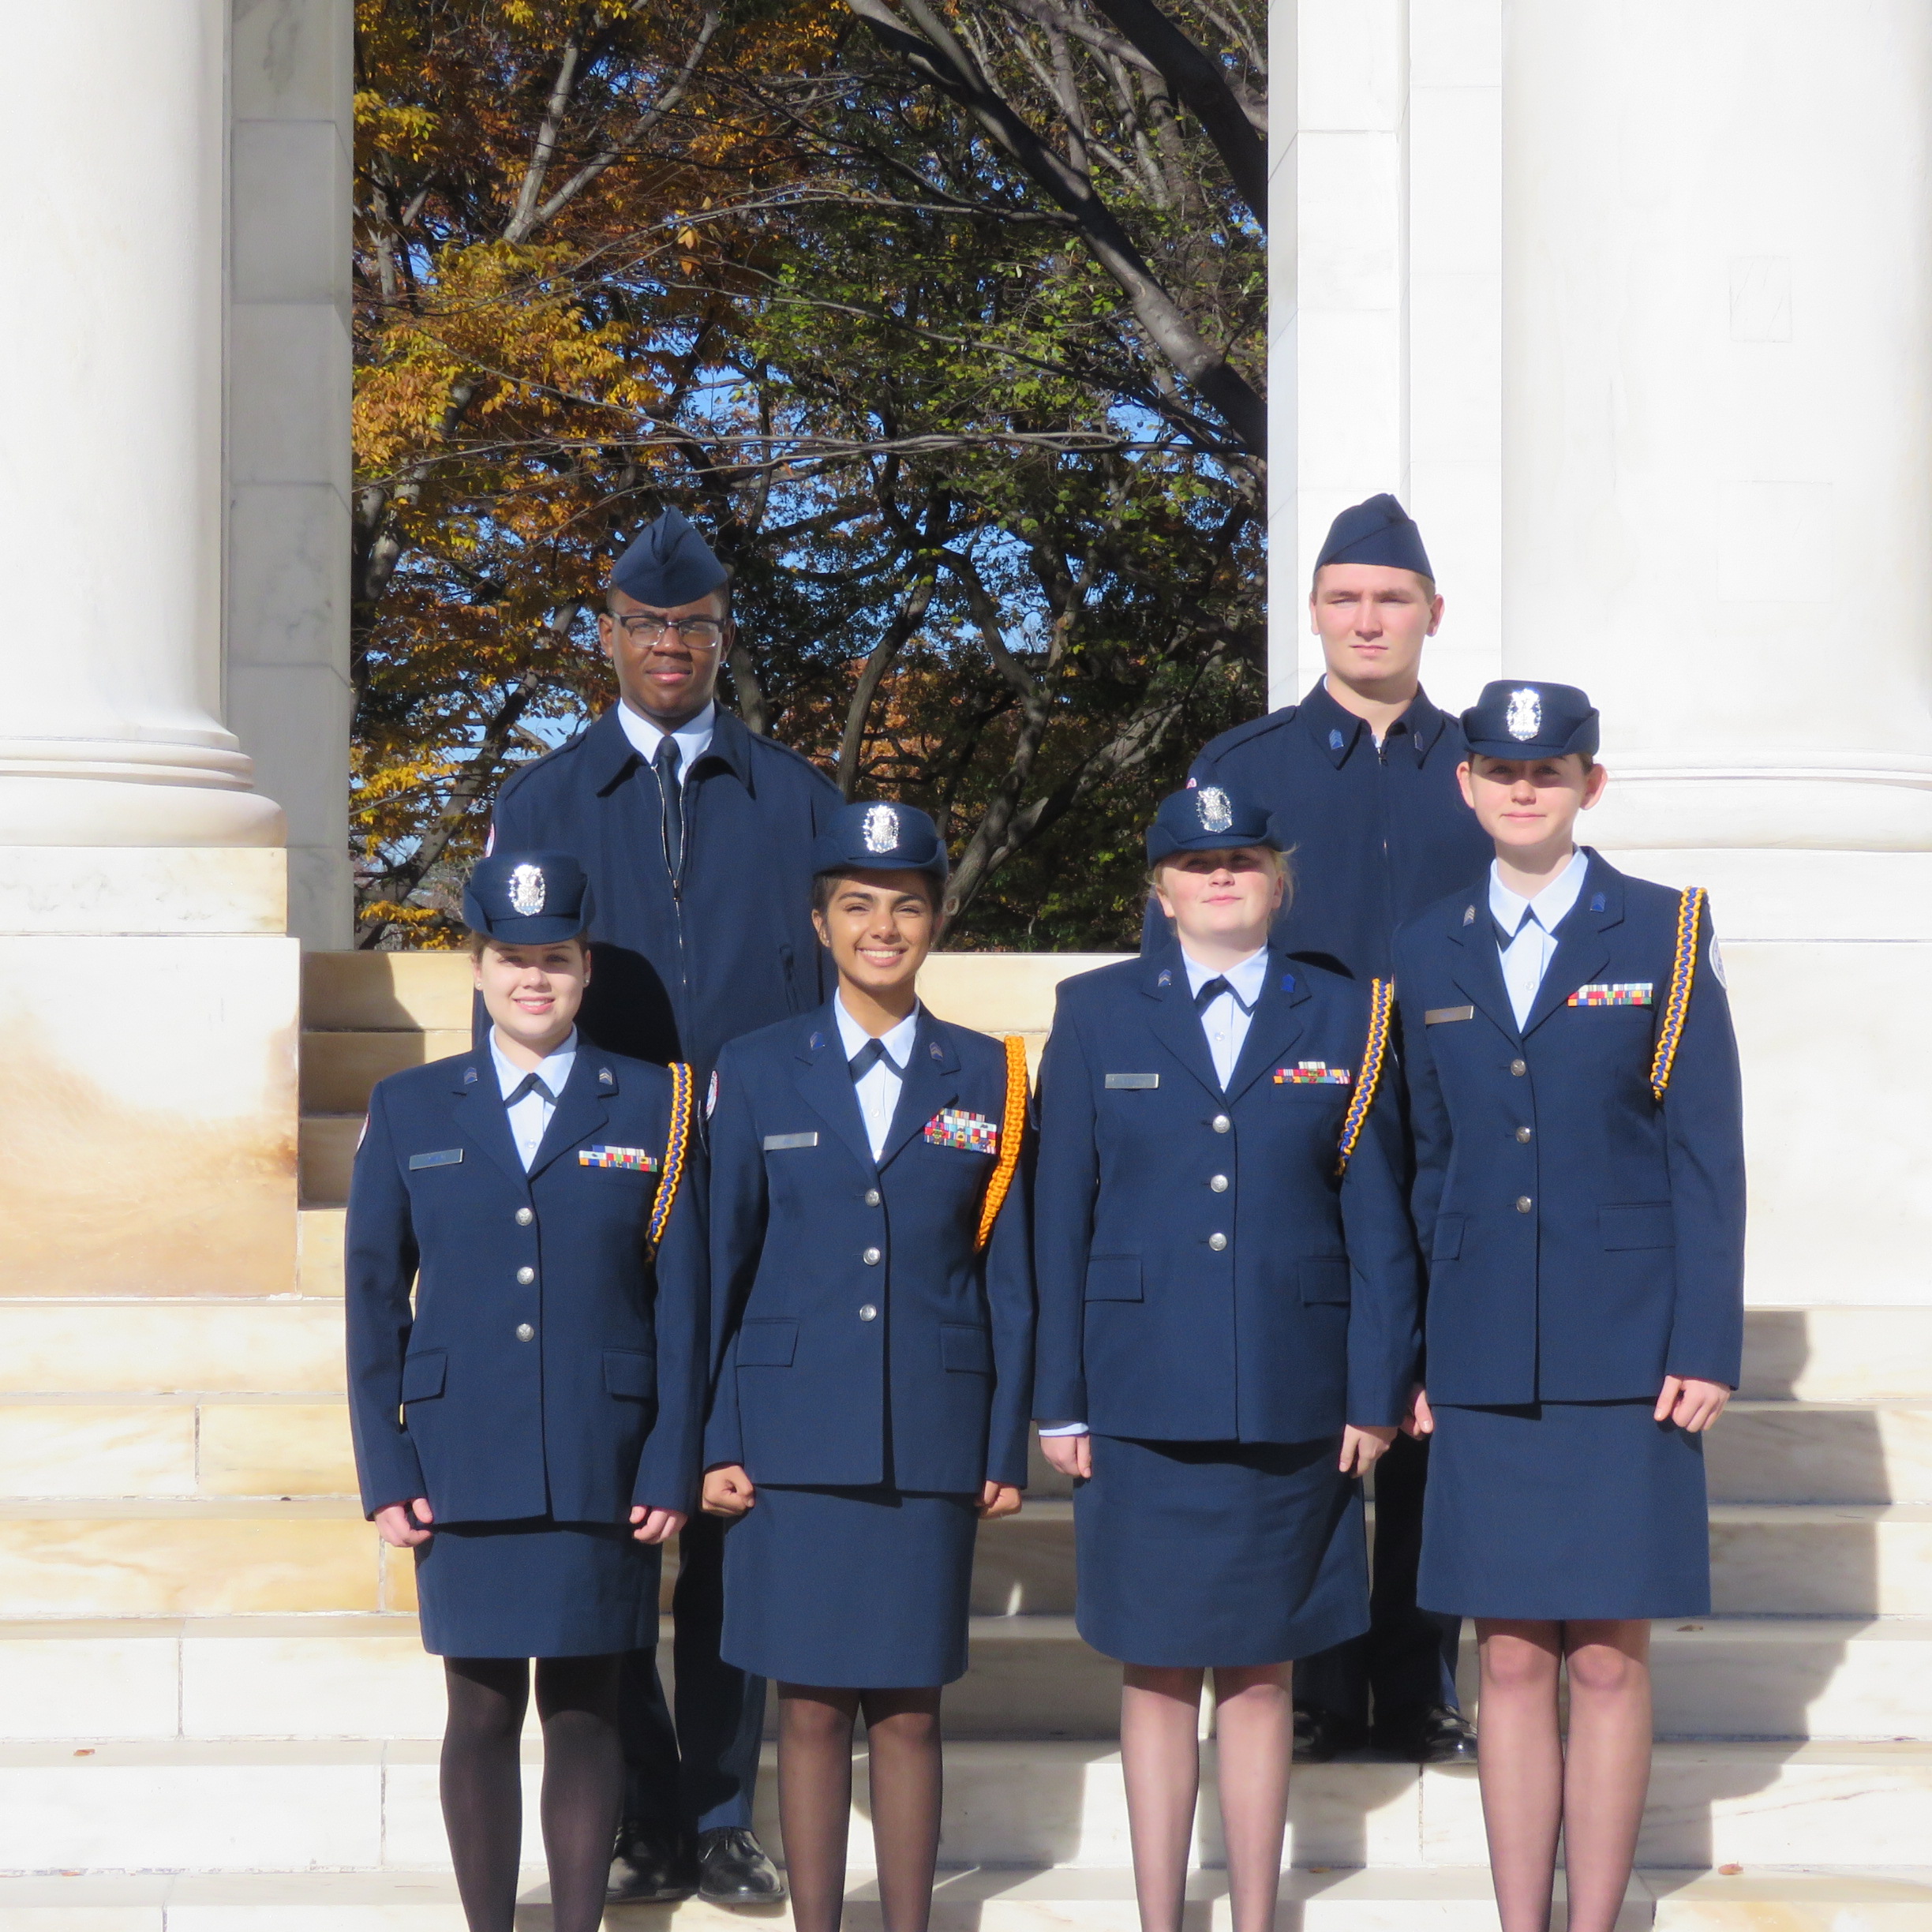 air force jrotc students posing in Washington, dc